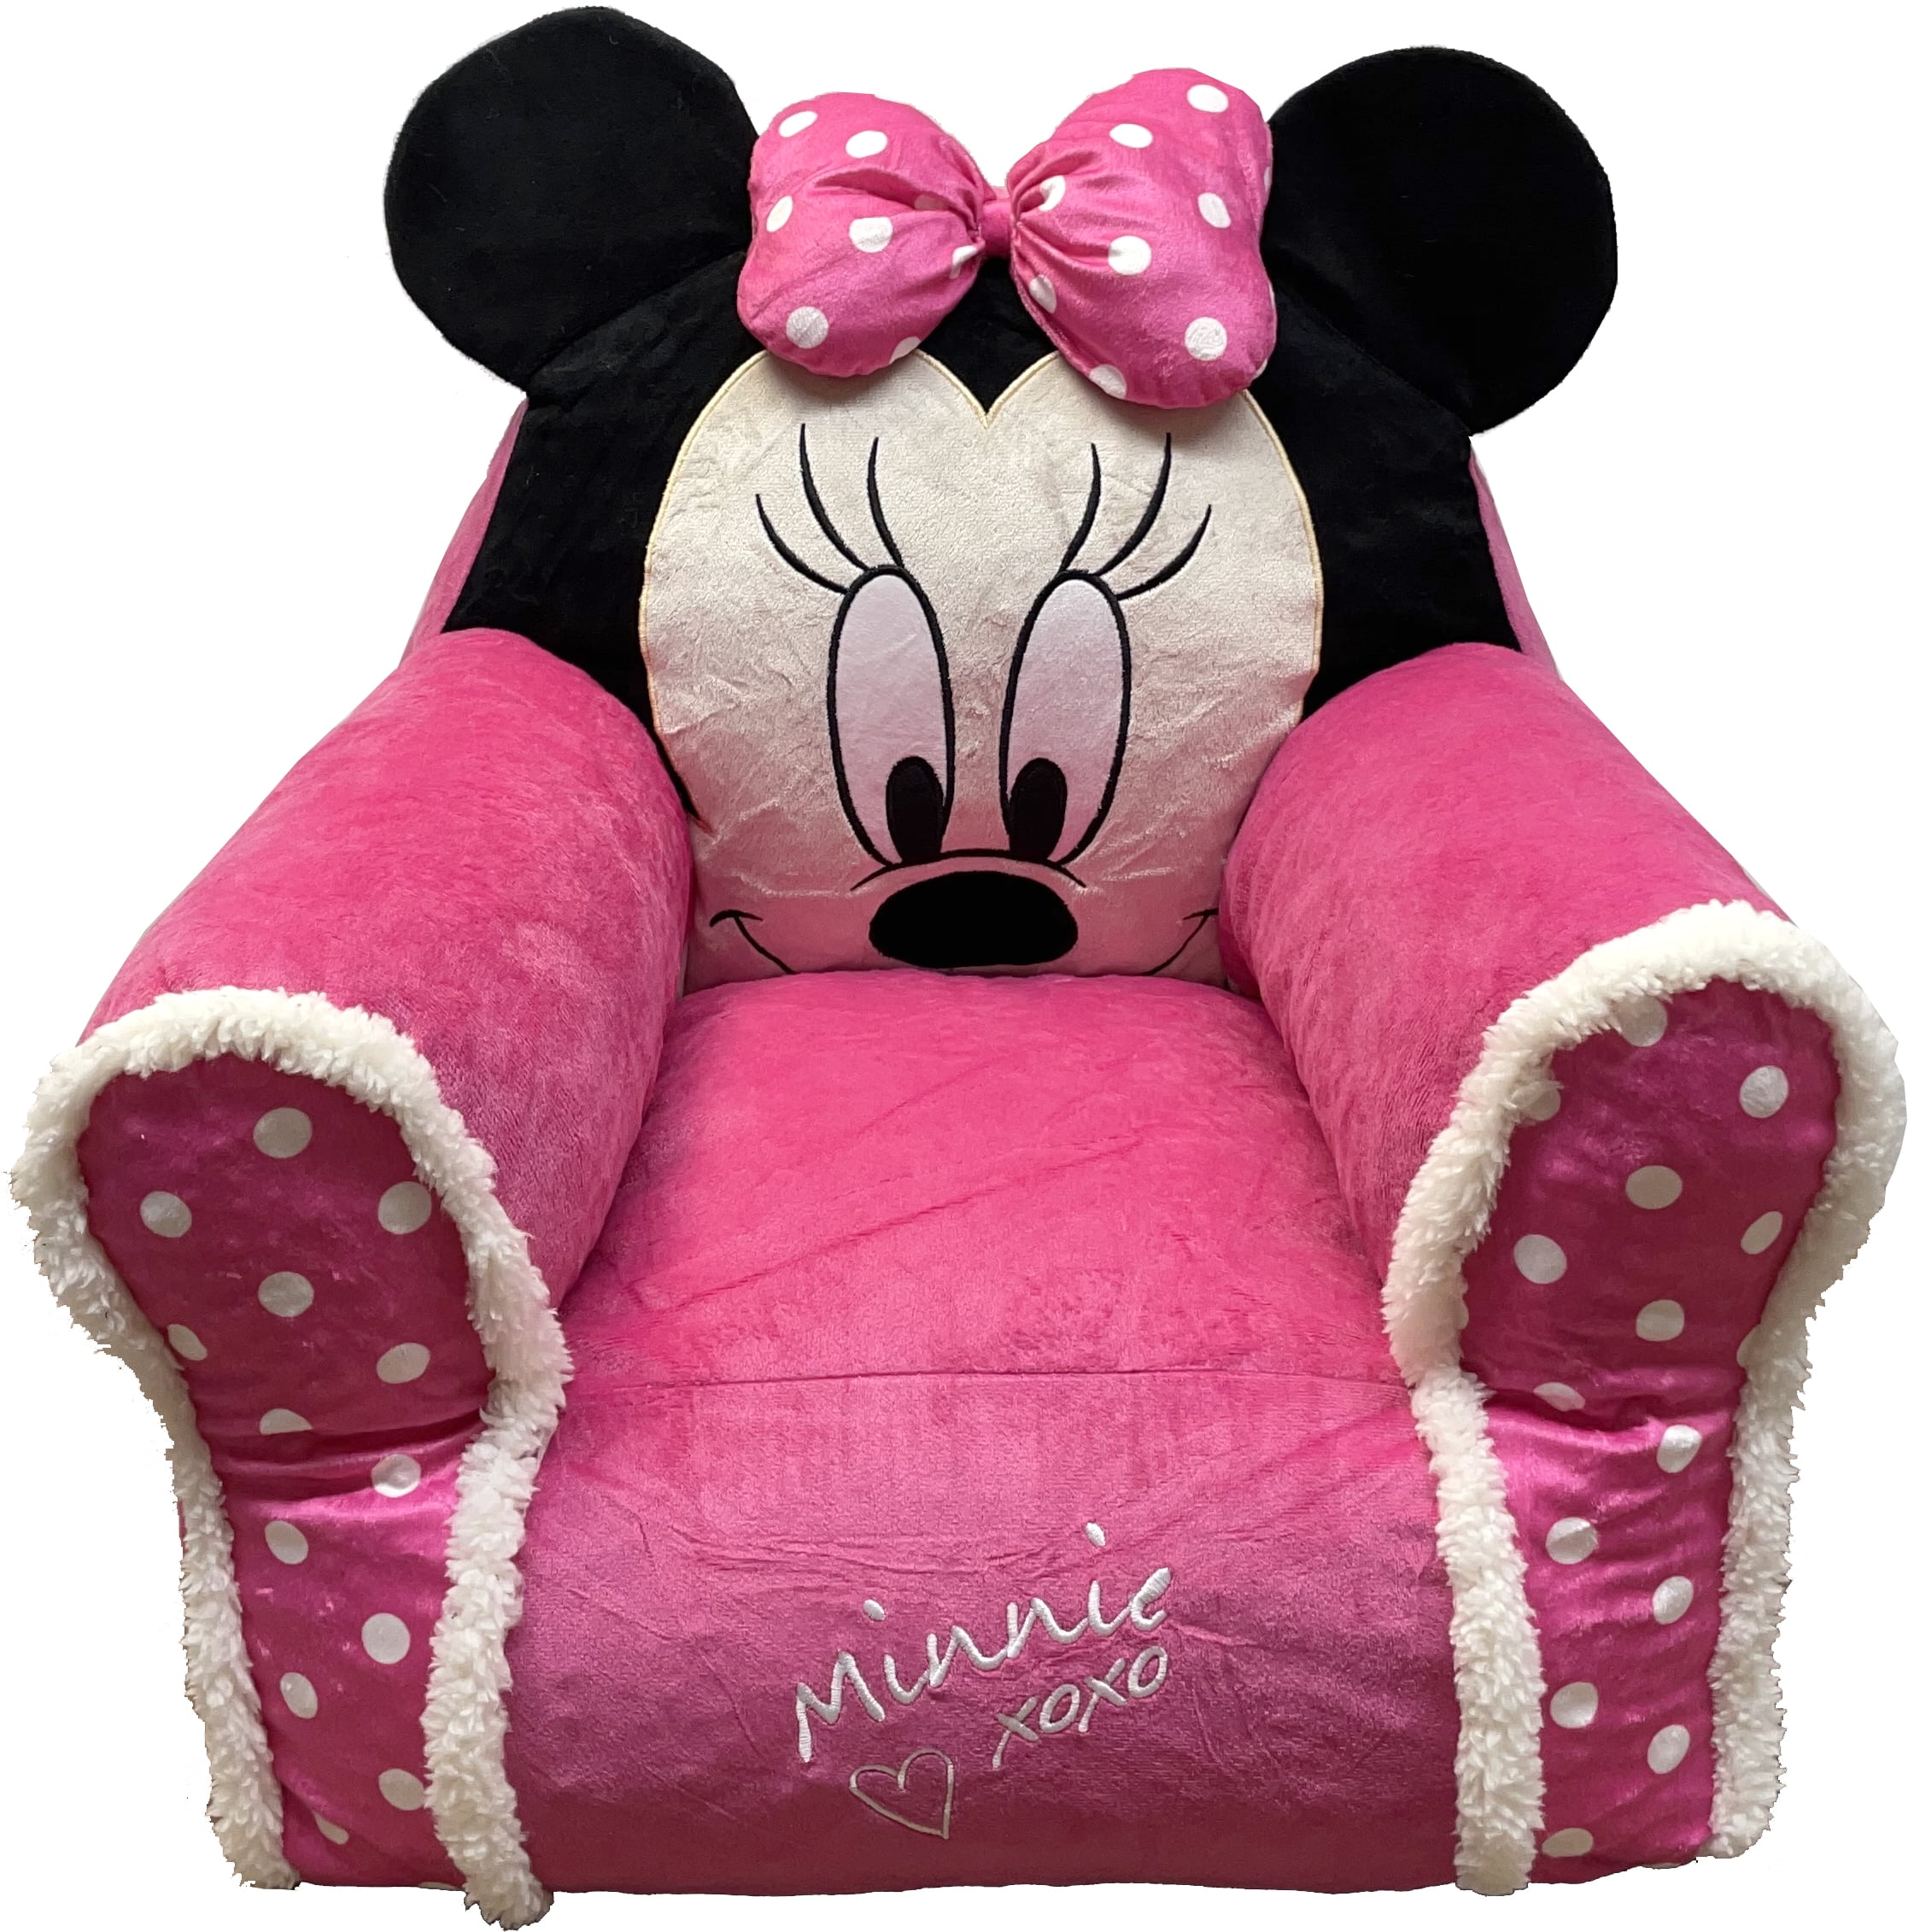 Disney Junior Minnie Mouse Kids Plush Sofa Bean Bag Chair With Sherpa Trimming 